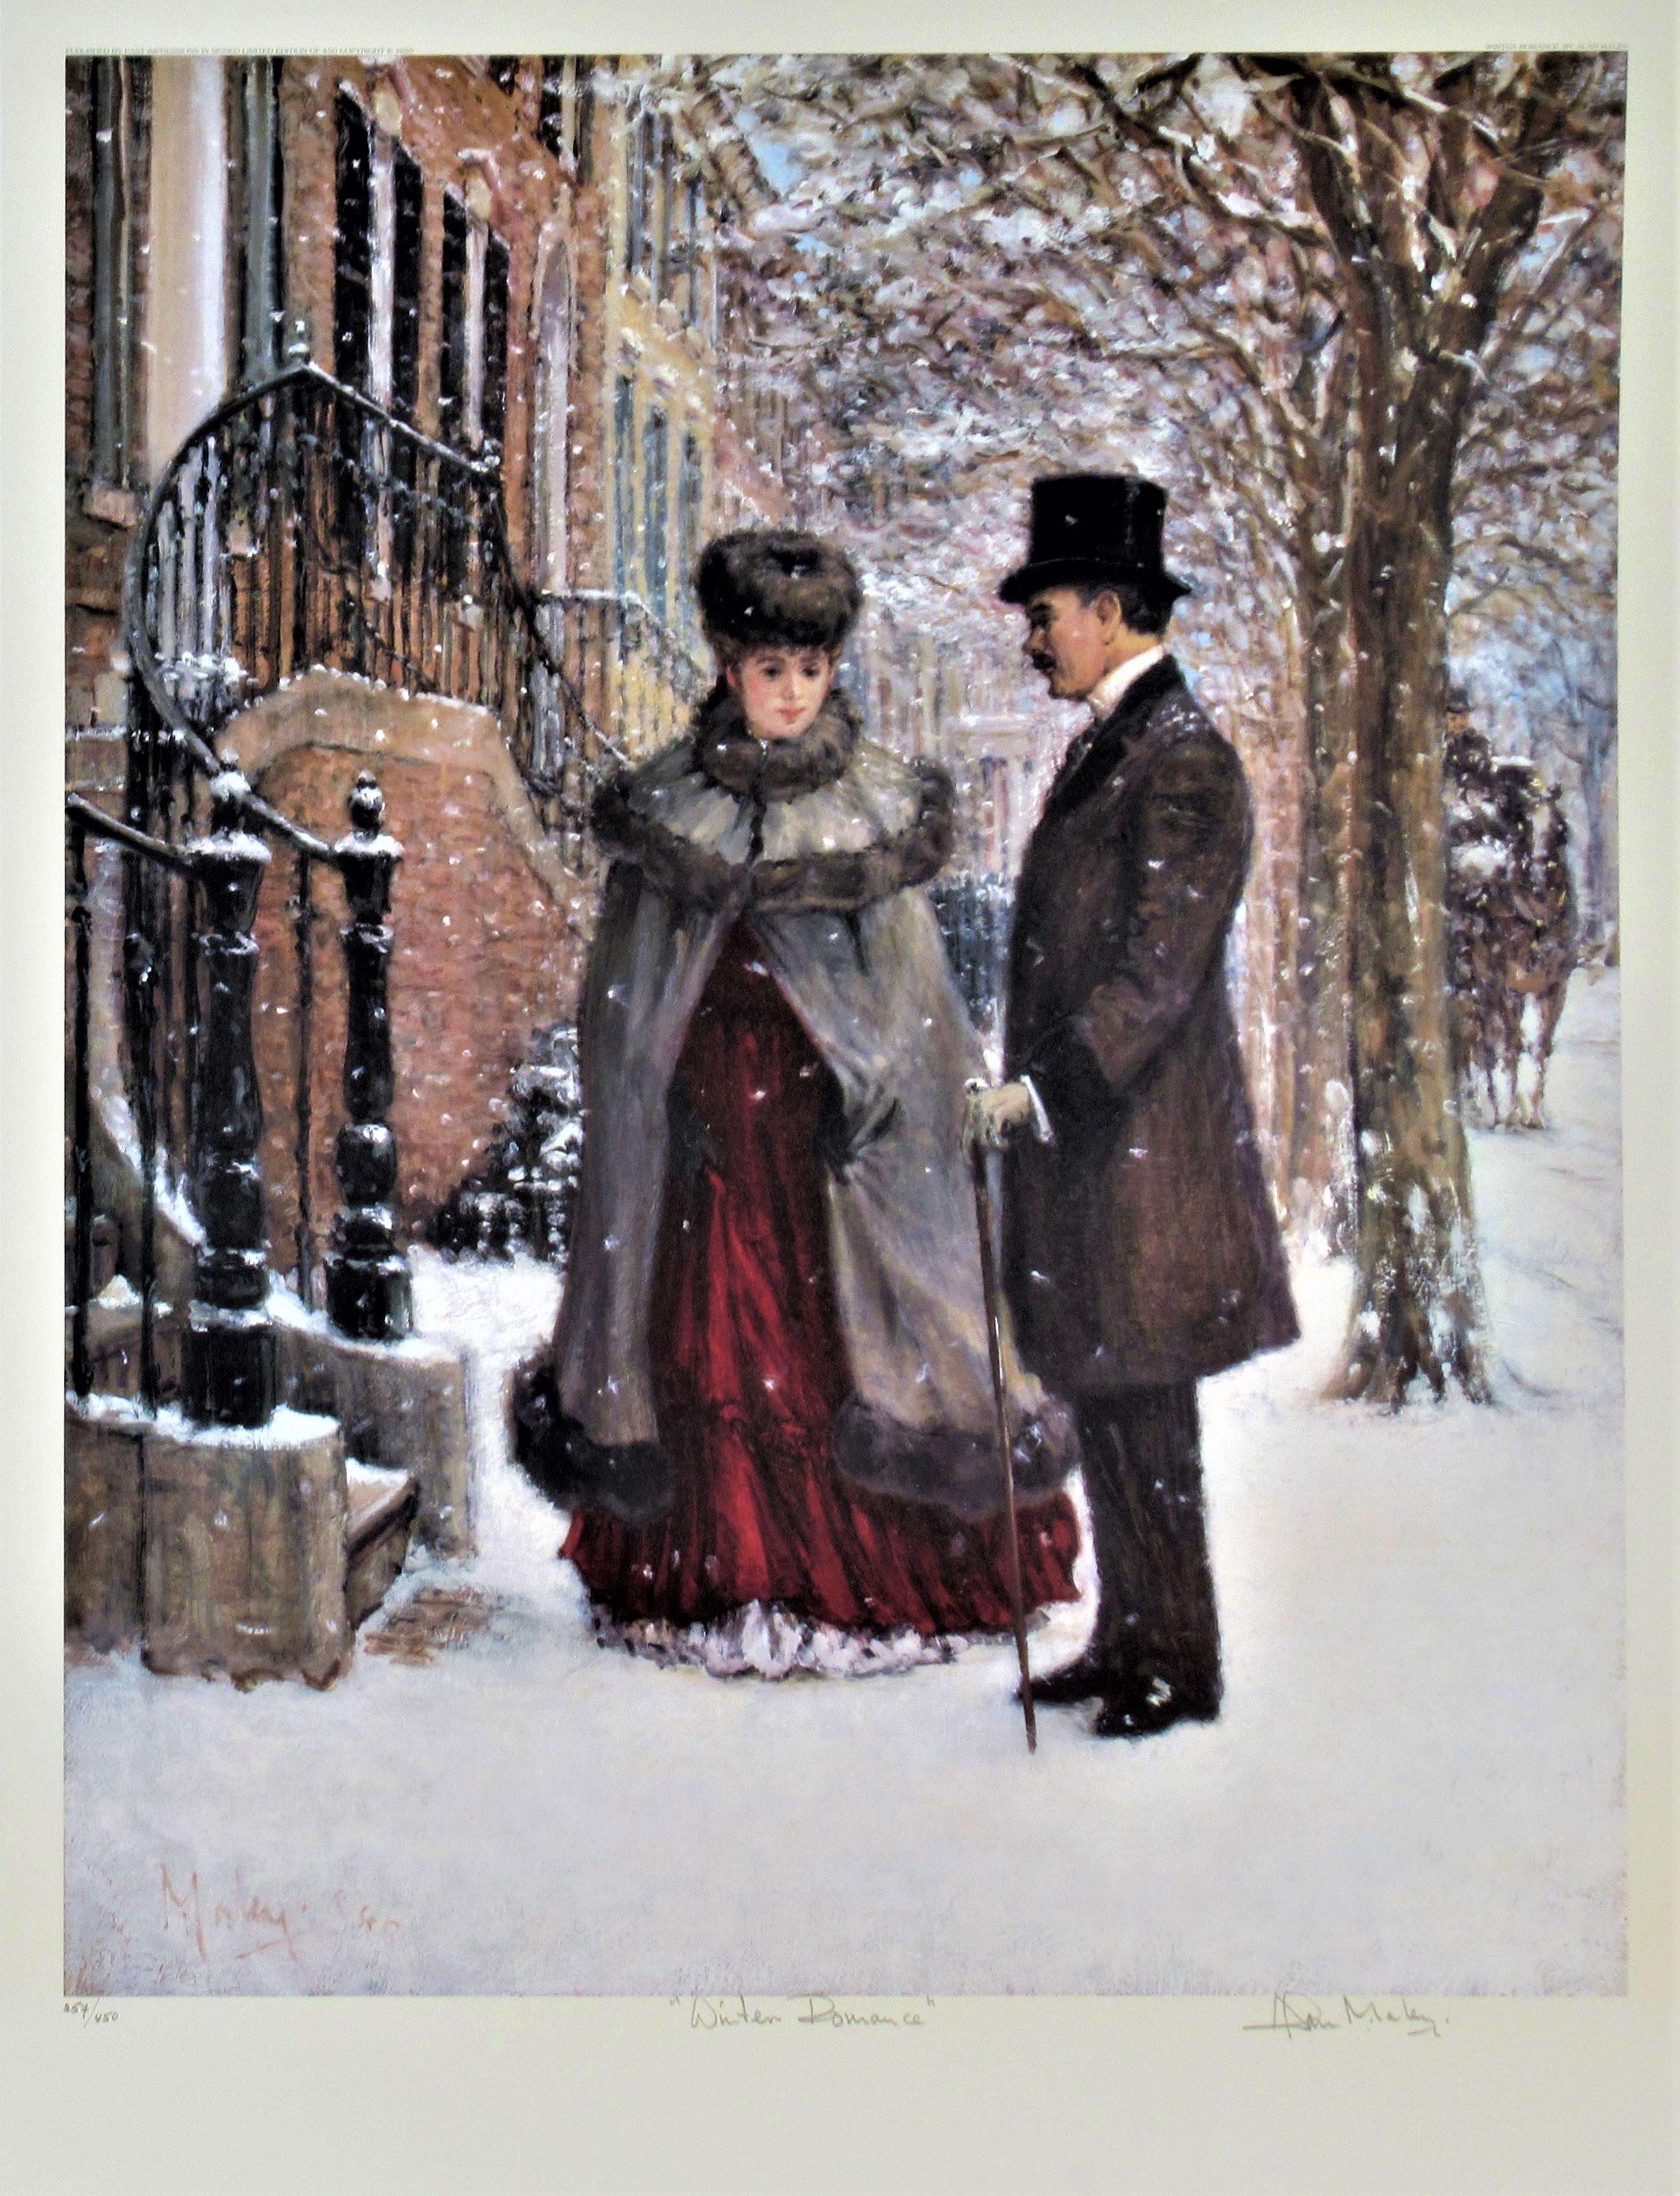 Alan Maley Figurative Print - Winter Romance